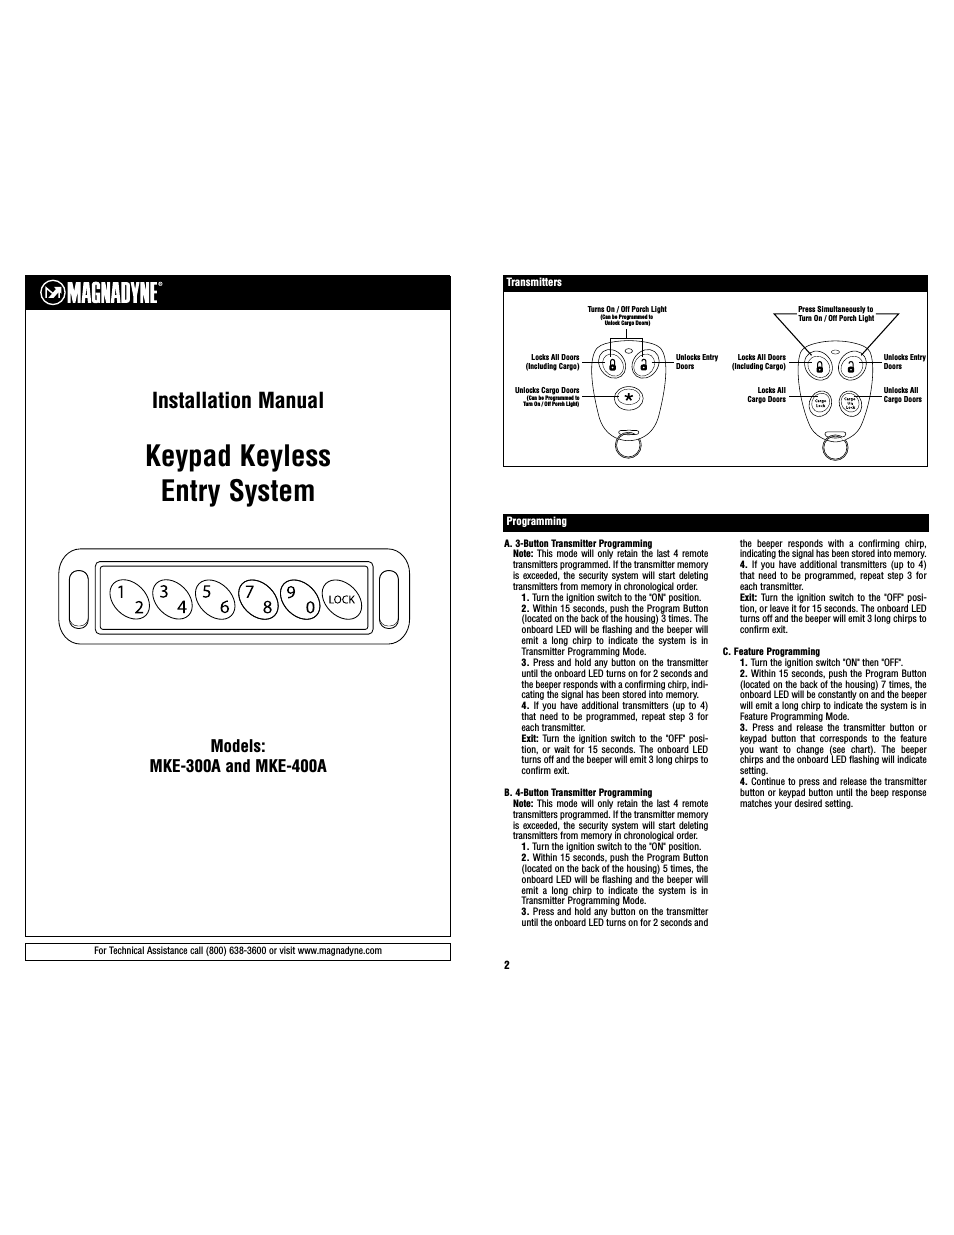 Keypad Keyless Entry System MKE-400A